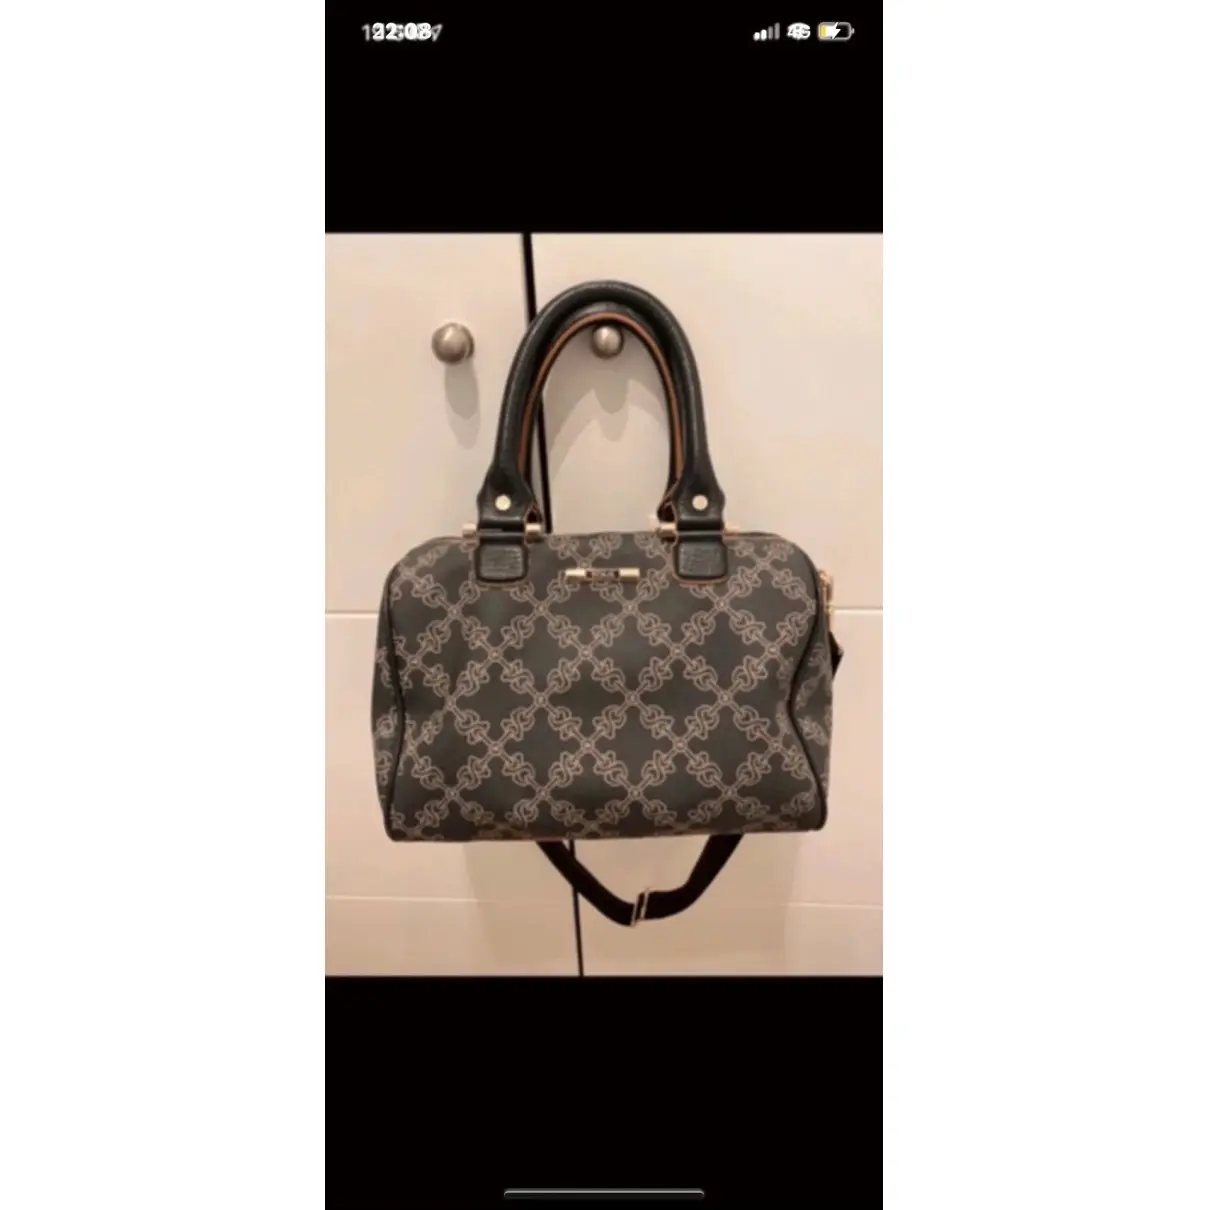 Buy TOUS Leather handbag online